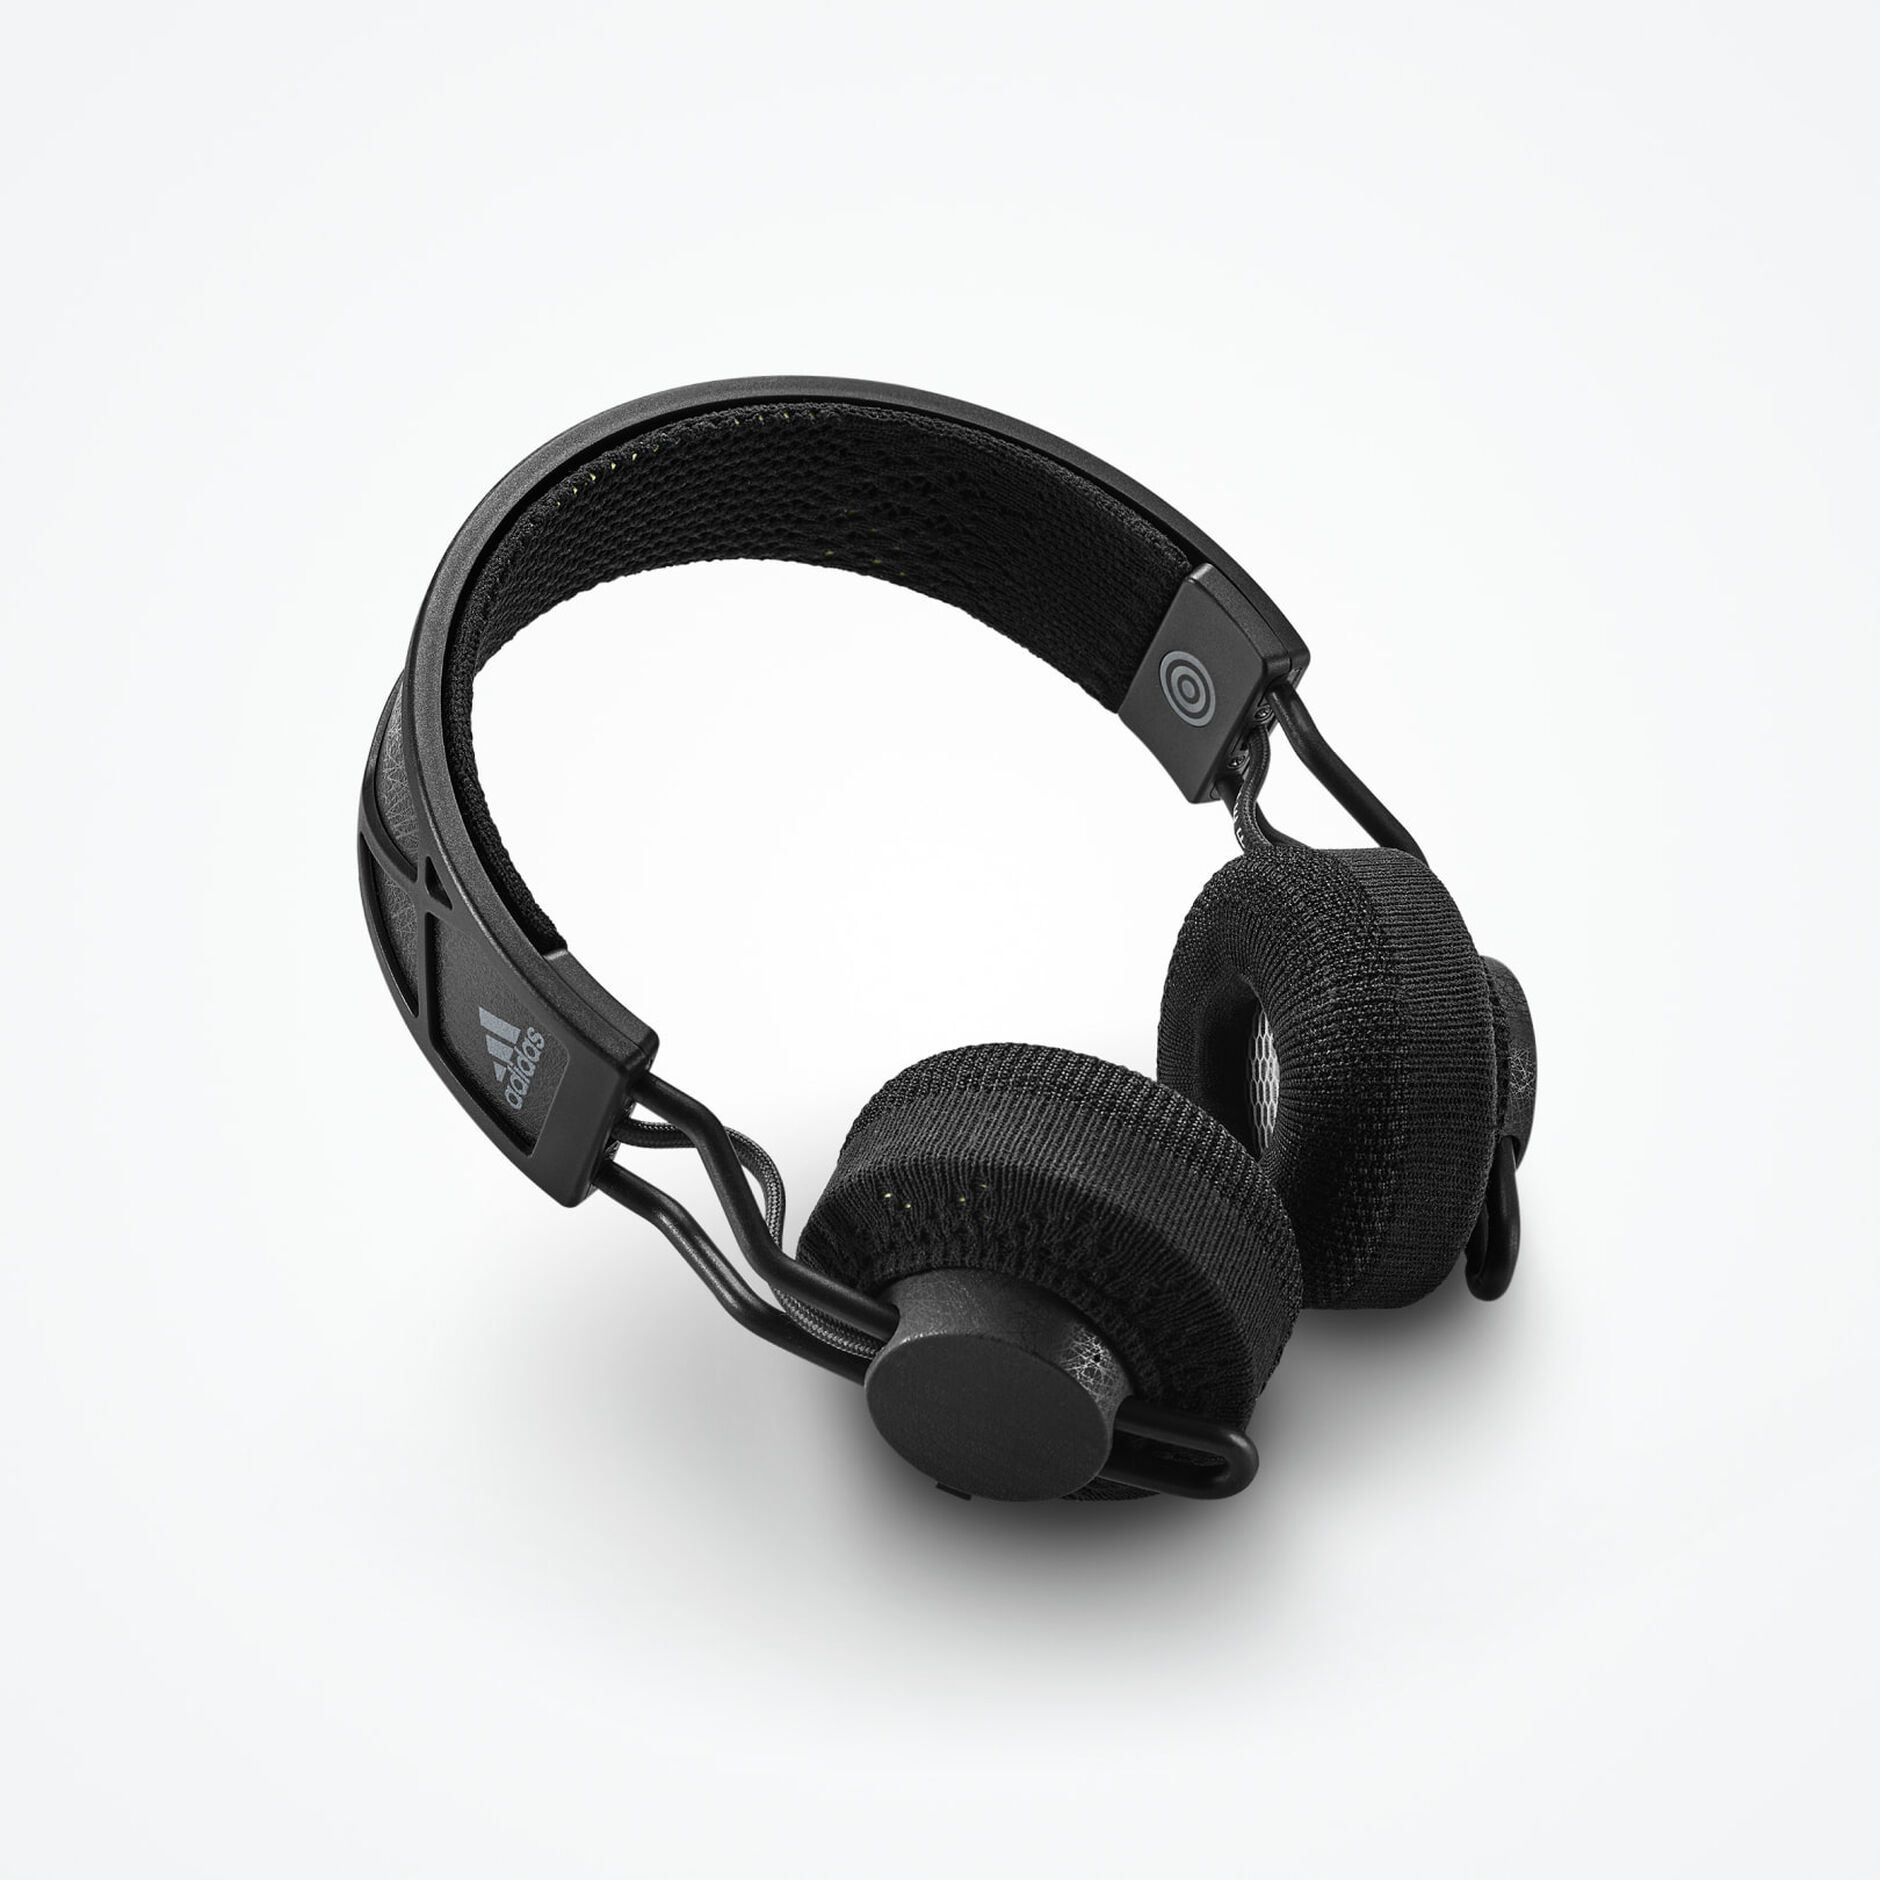 Adidas RPT-02 SOL wireless headphones